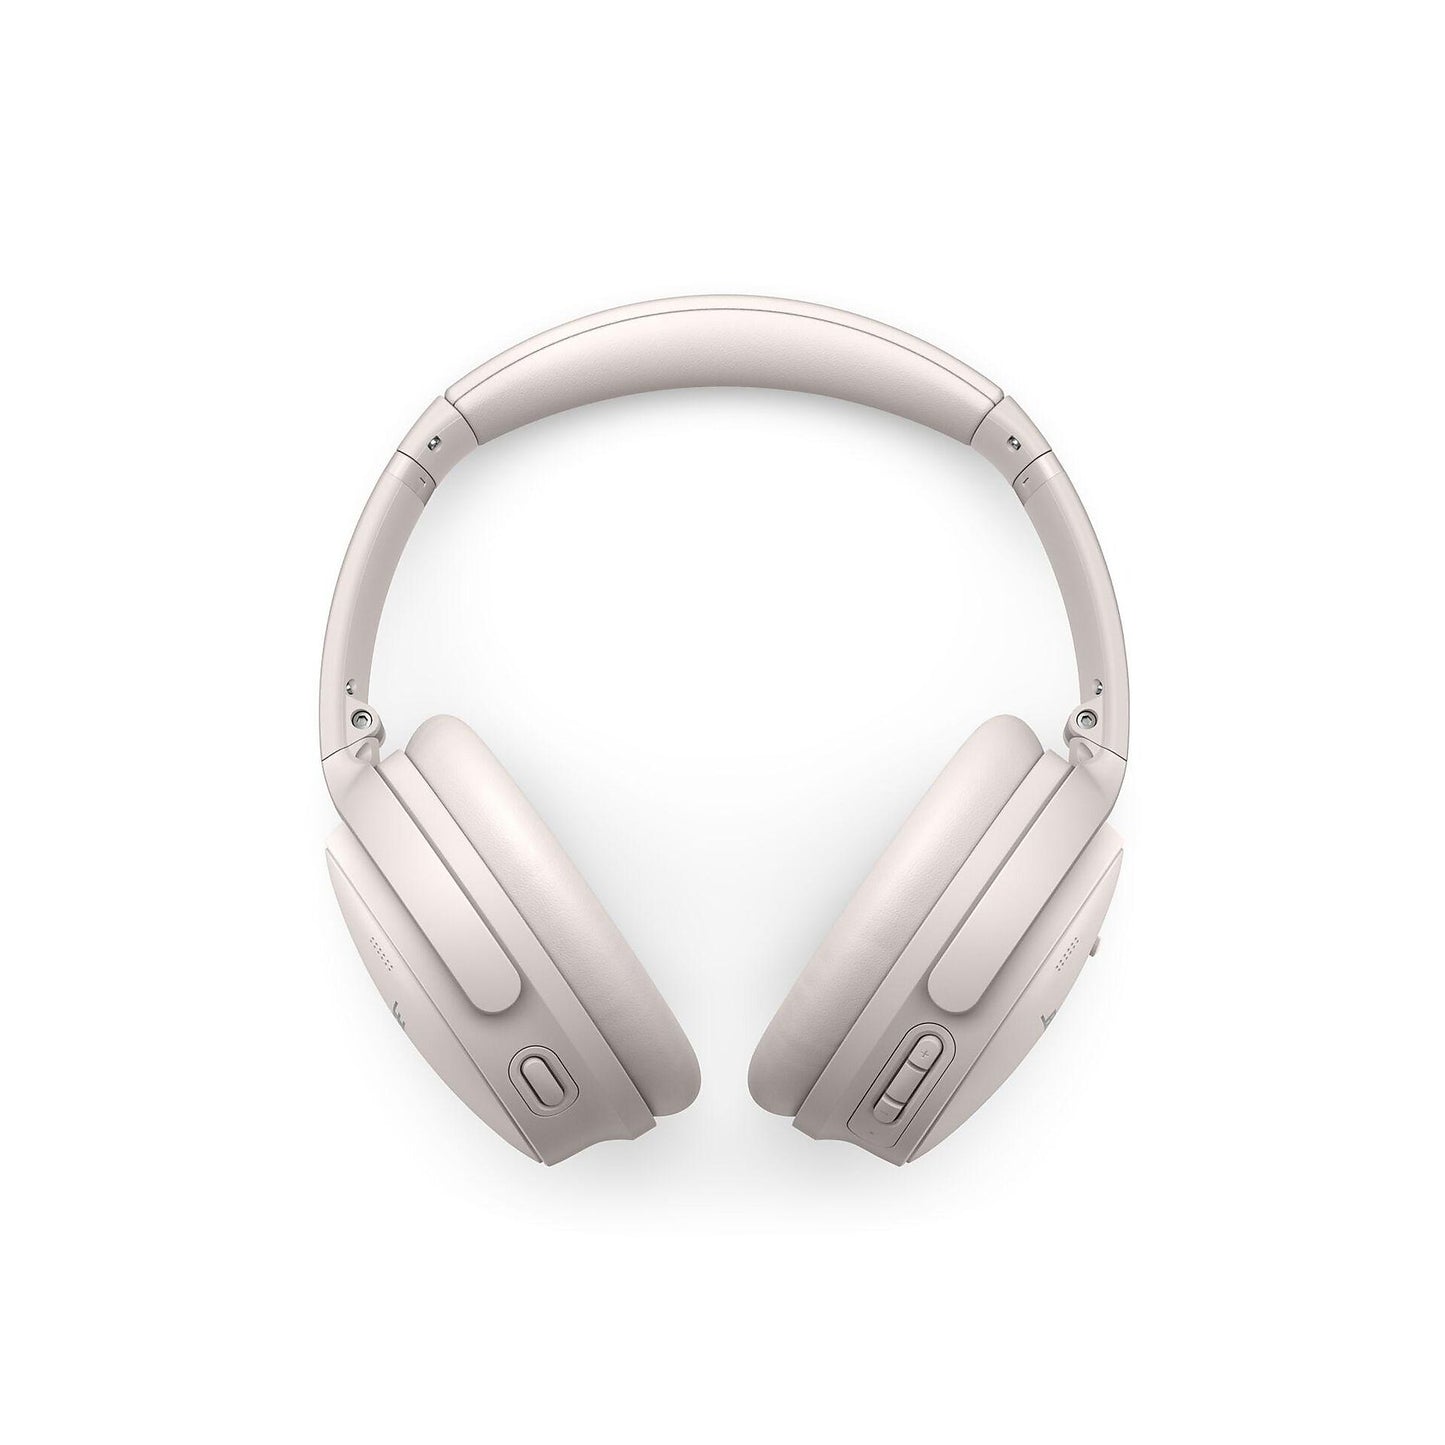 BOSE QuietComfort Headphones, Noise-Cancelling, Over-ear Kopfhörer Bluetooth Weiß